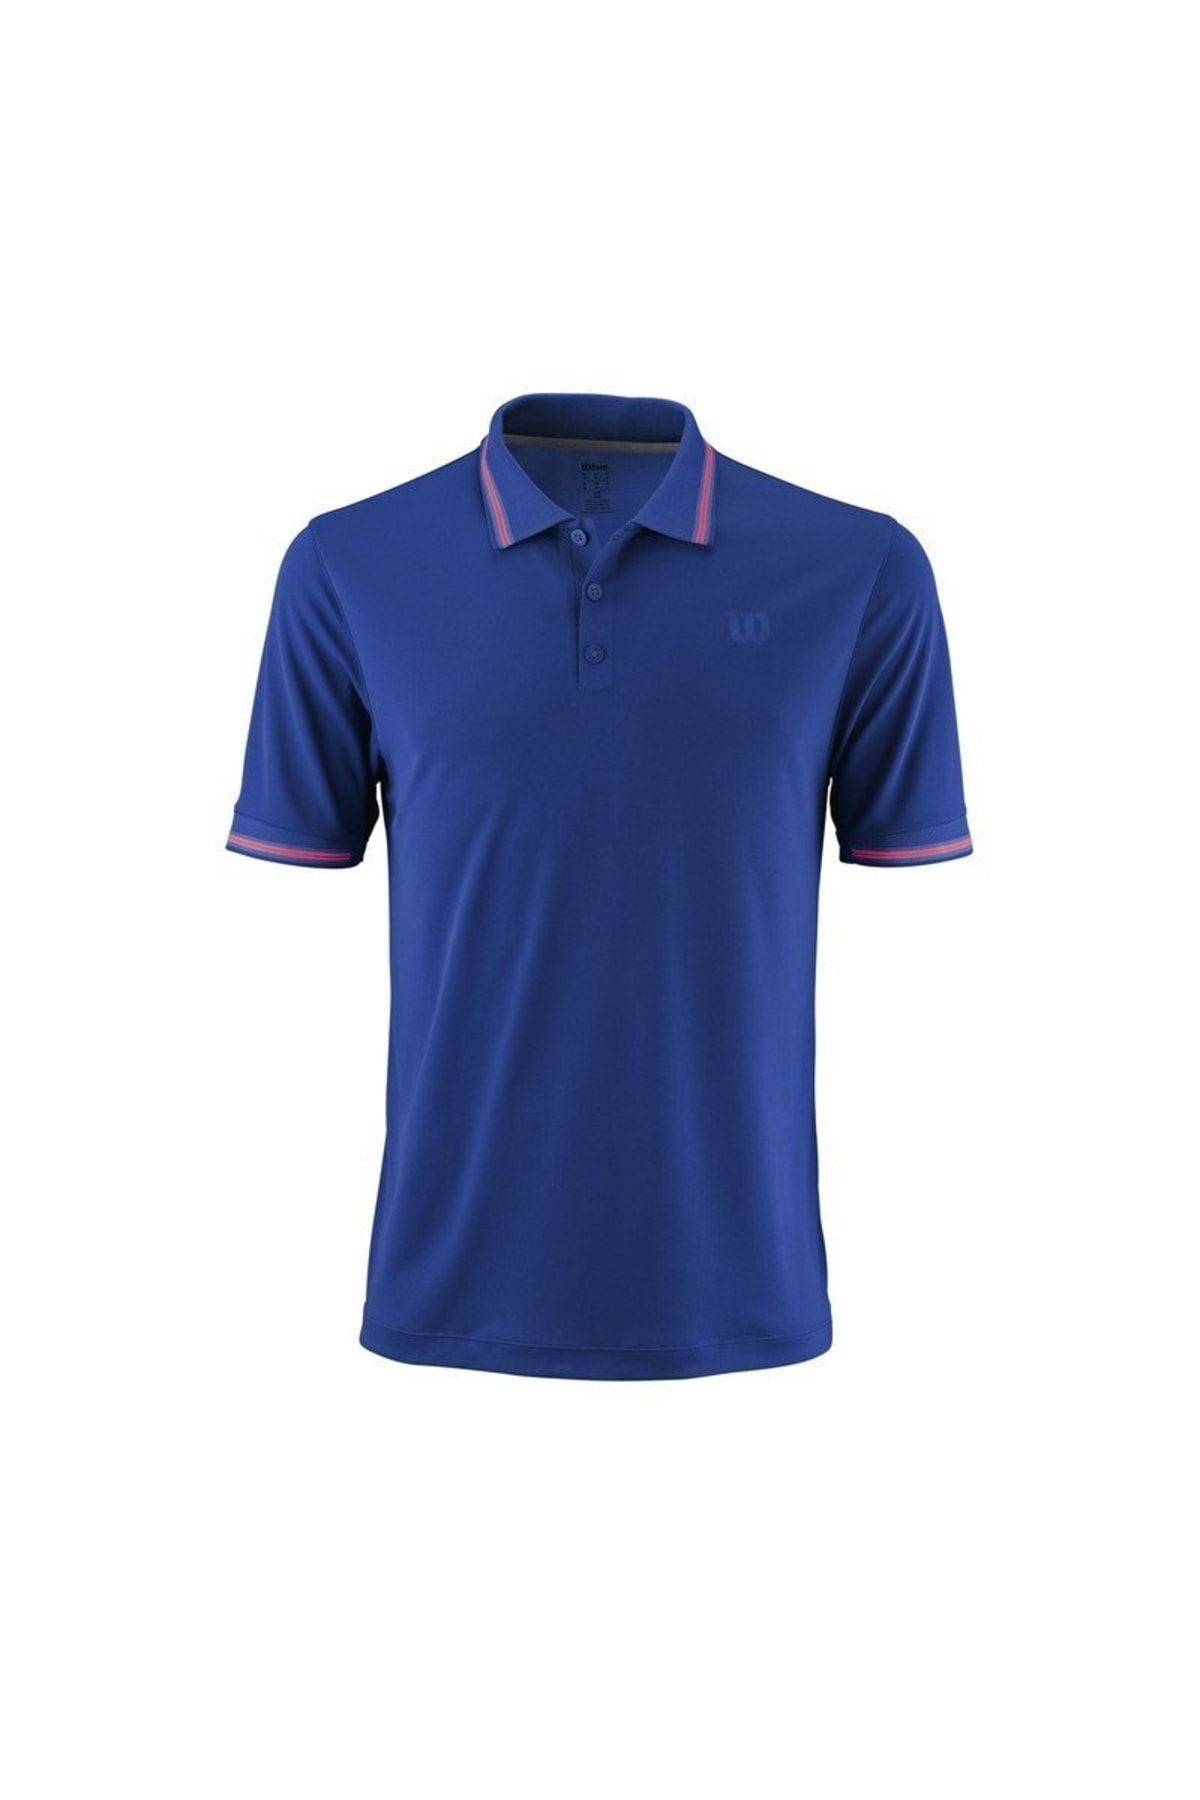 Wilson Polo Star Mavi Erkek Tenis T-shirt Wra744805